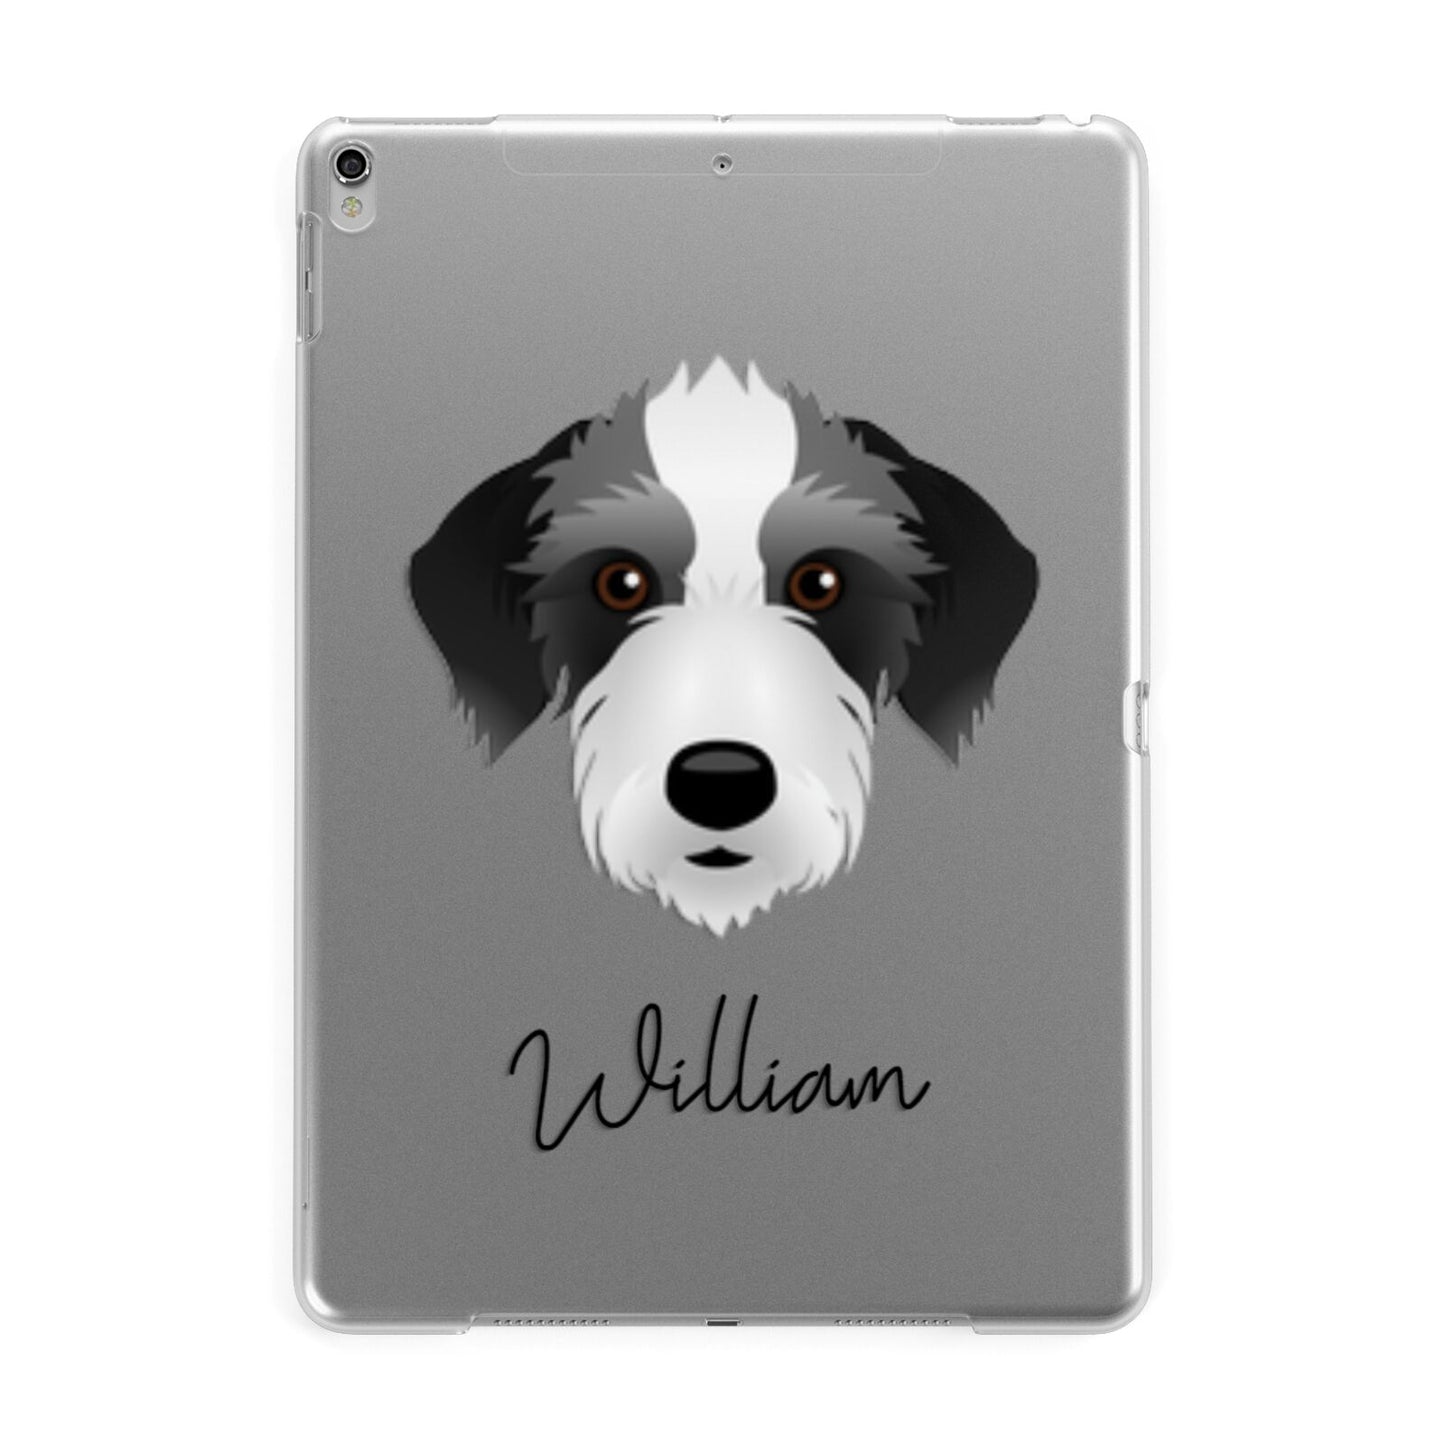 Bedlington Whippet Personalised Apple iPad Silver Case